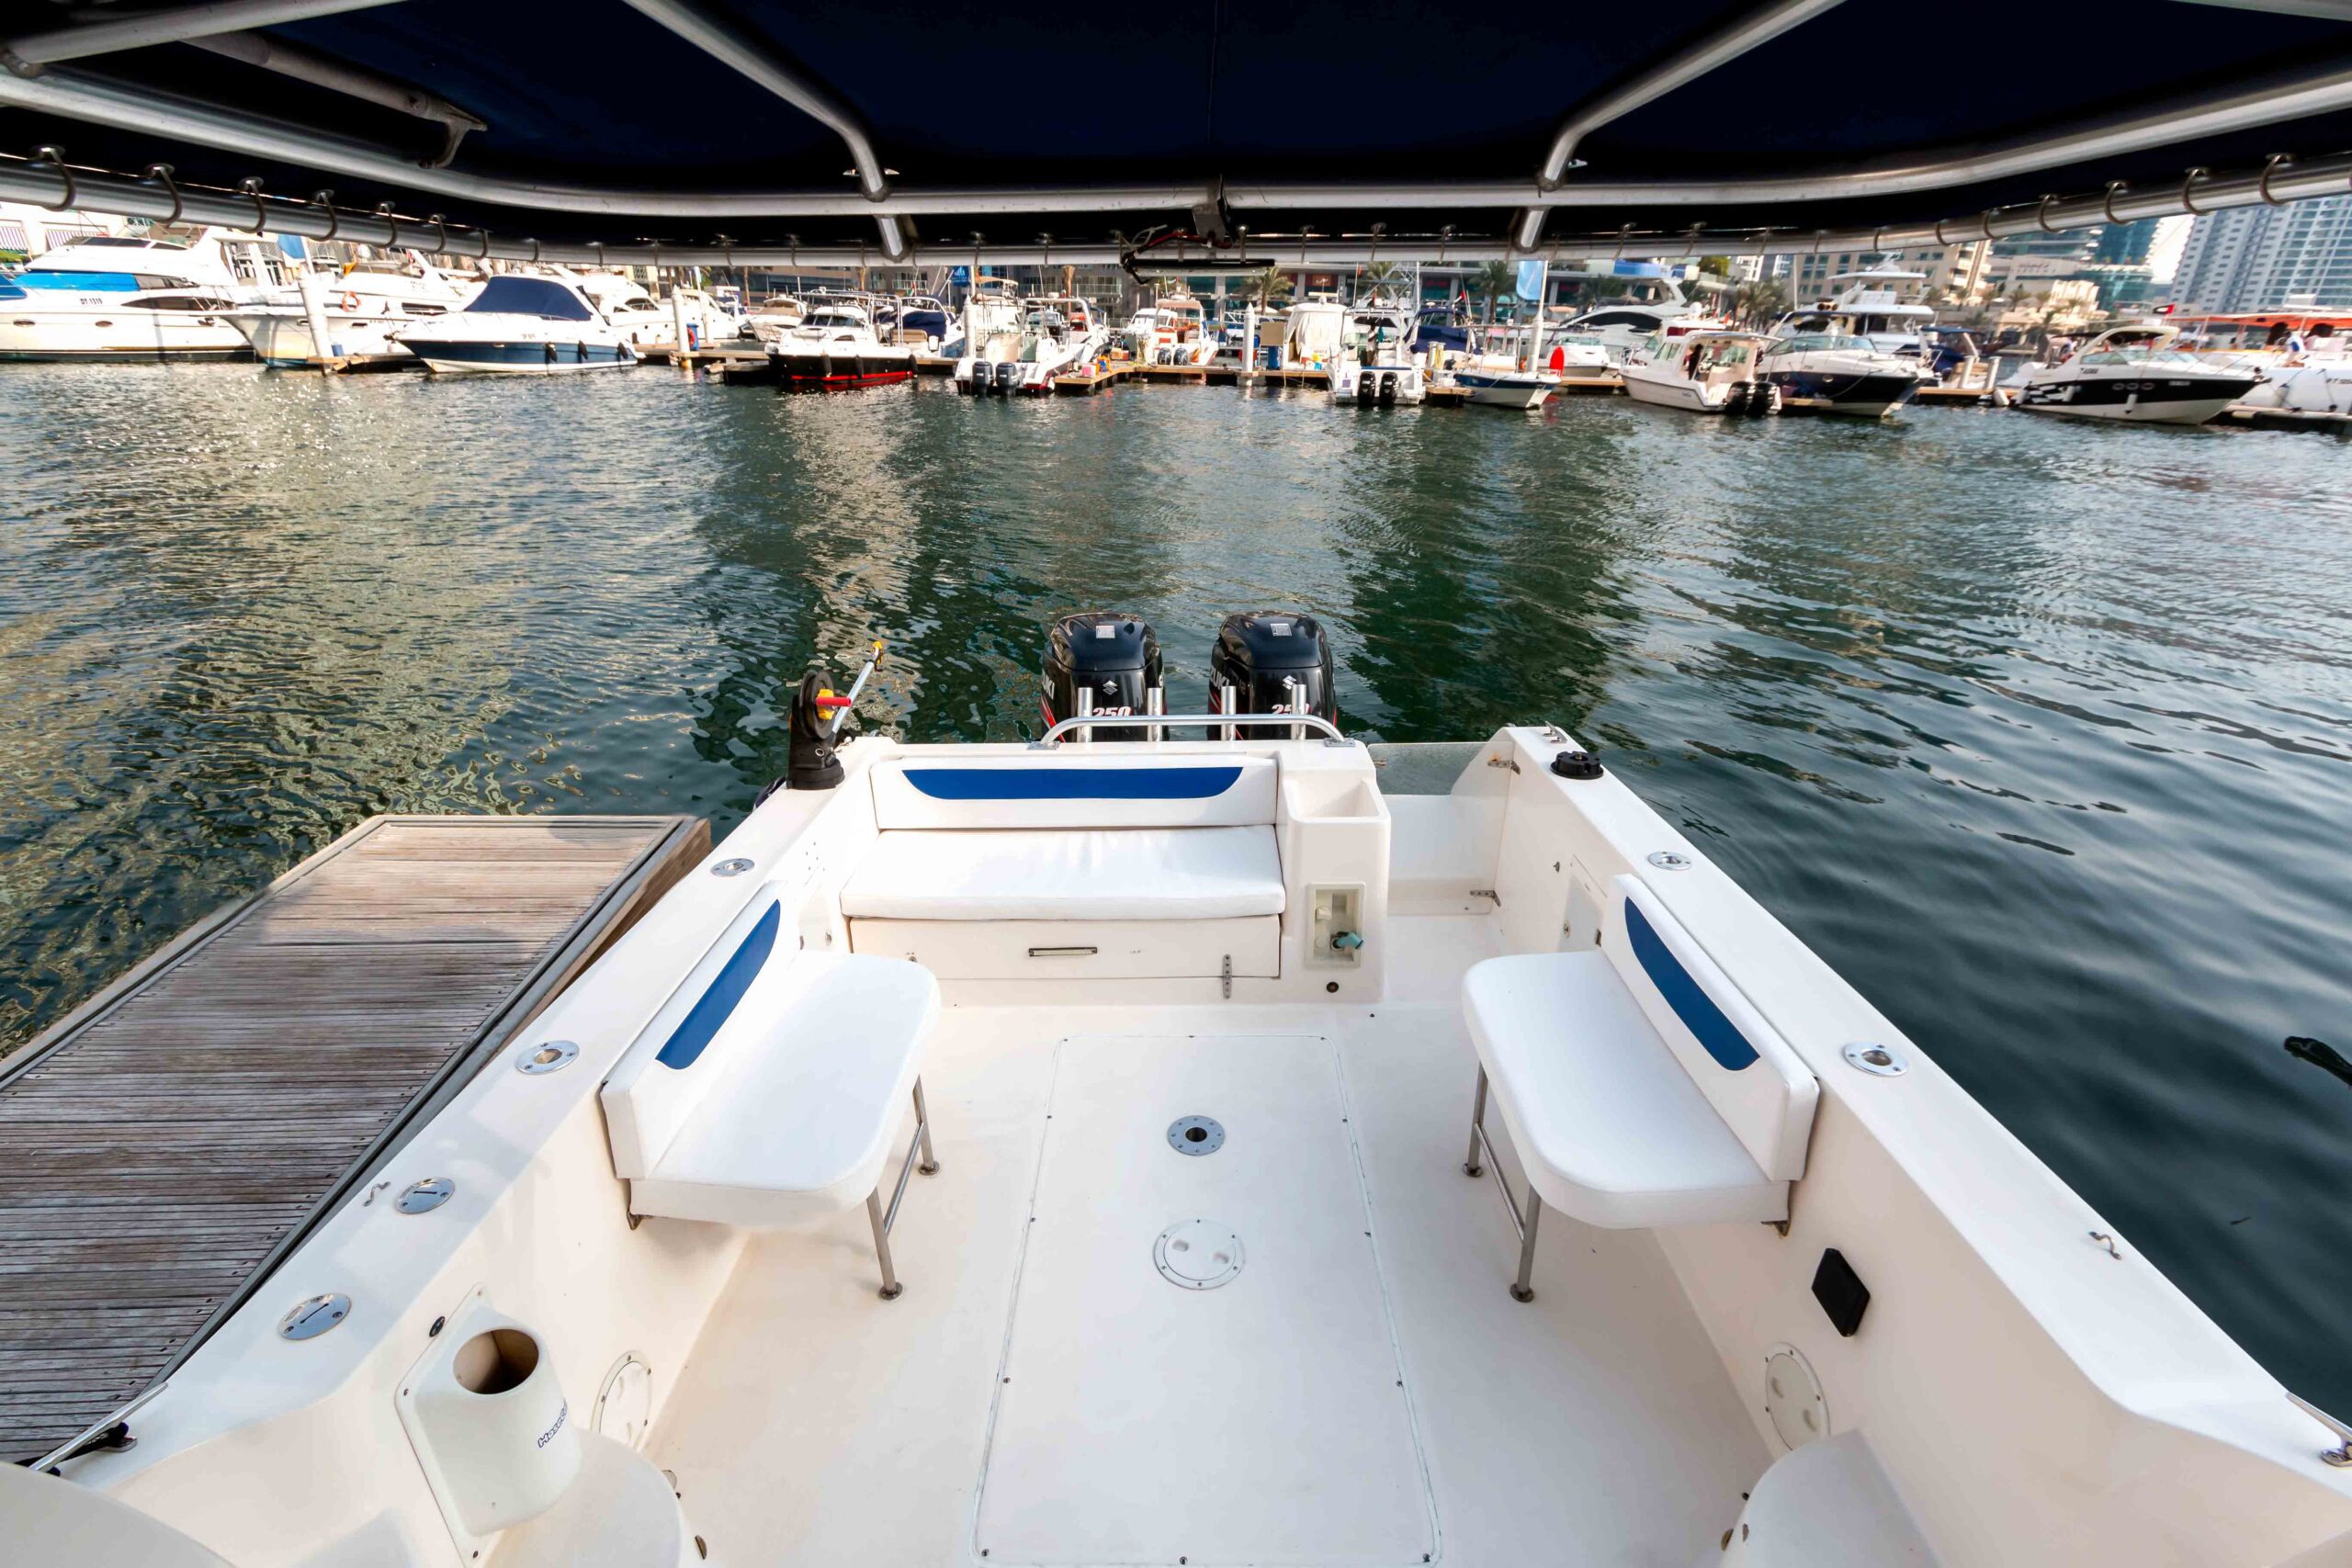 Explorer Goldeon Quest 31 ft. yacht with best price in Dubai